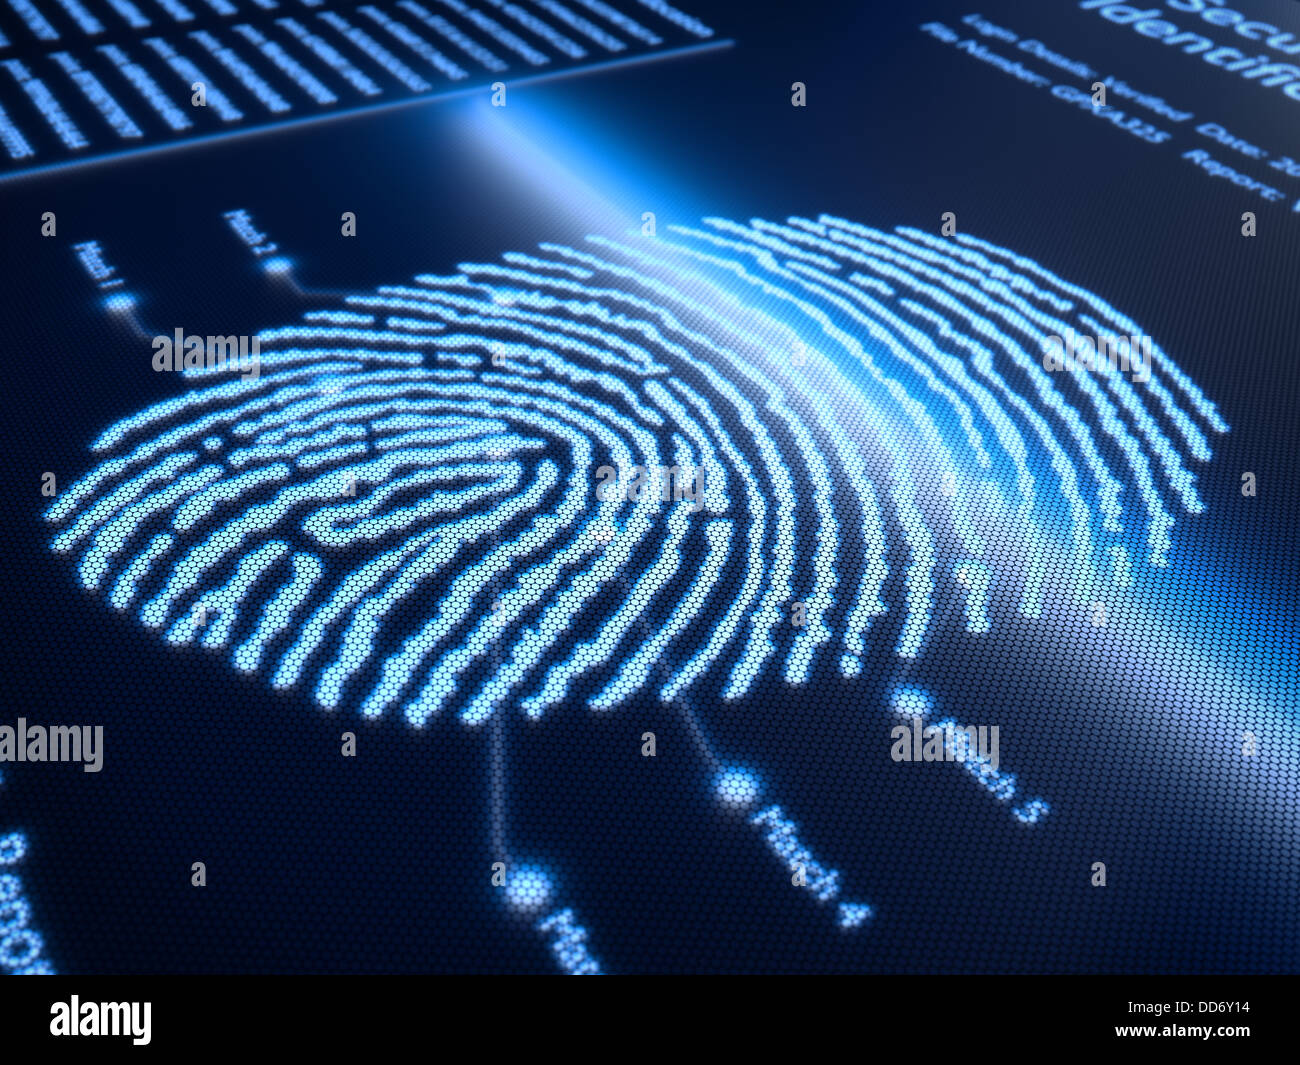 Fingerprint scanning technology on pixellated screen - 3d rendered with slight DOF Stock Photo